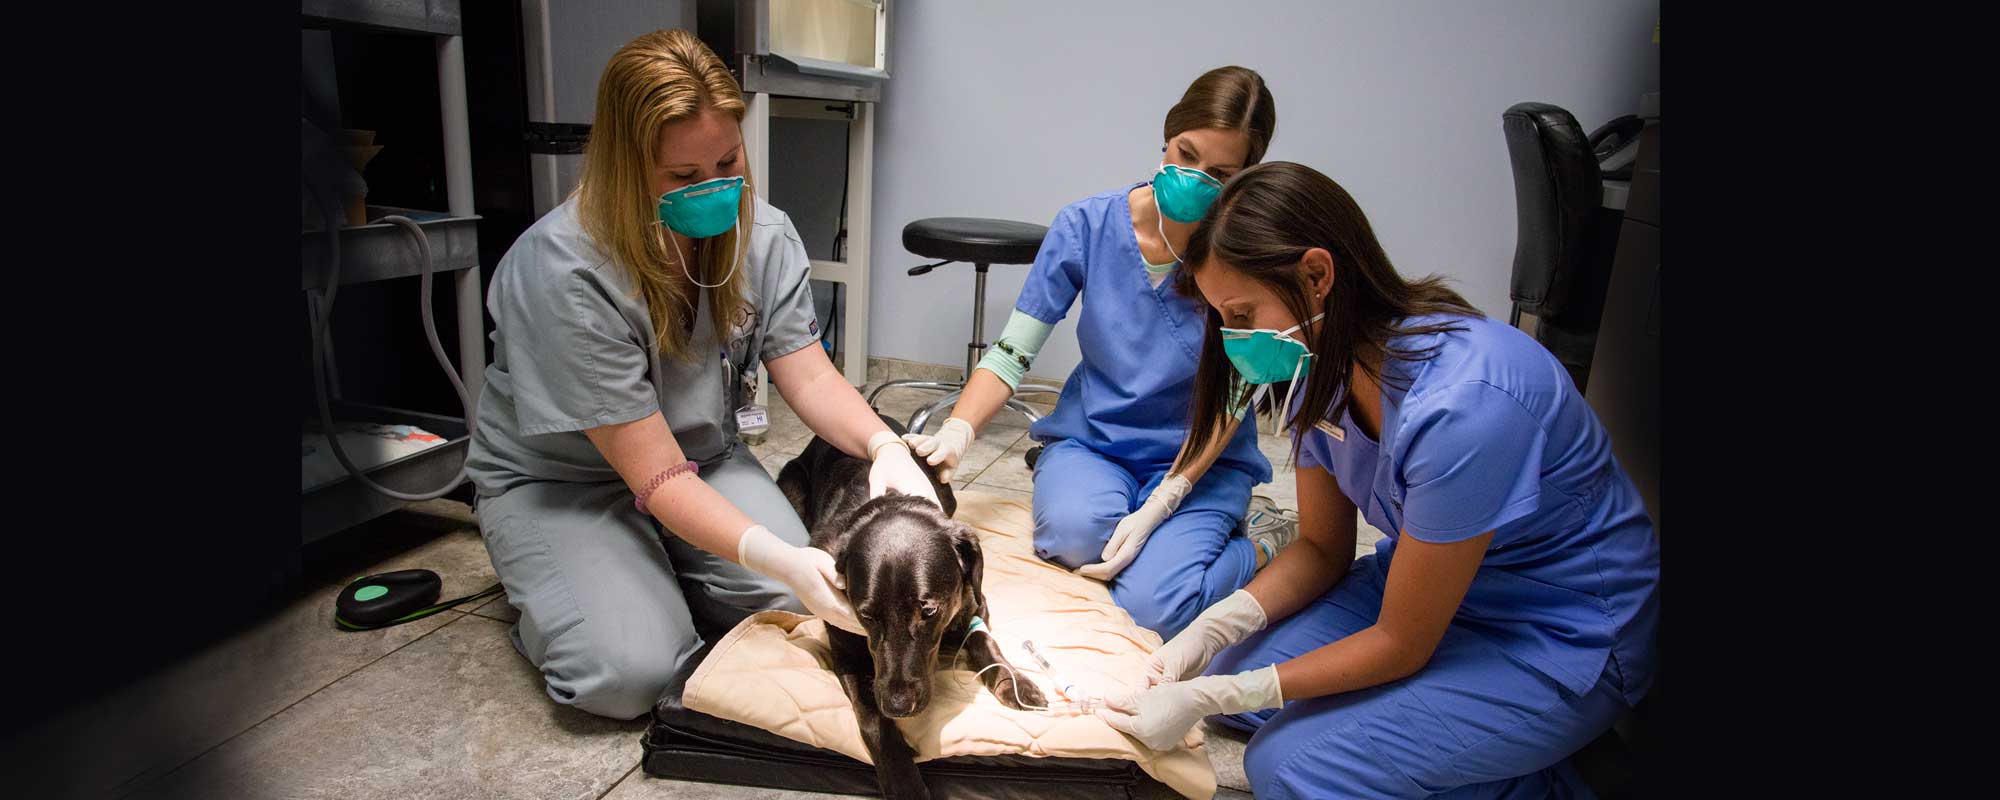 Charleston Veterinary Referral Center